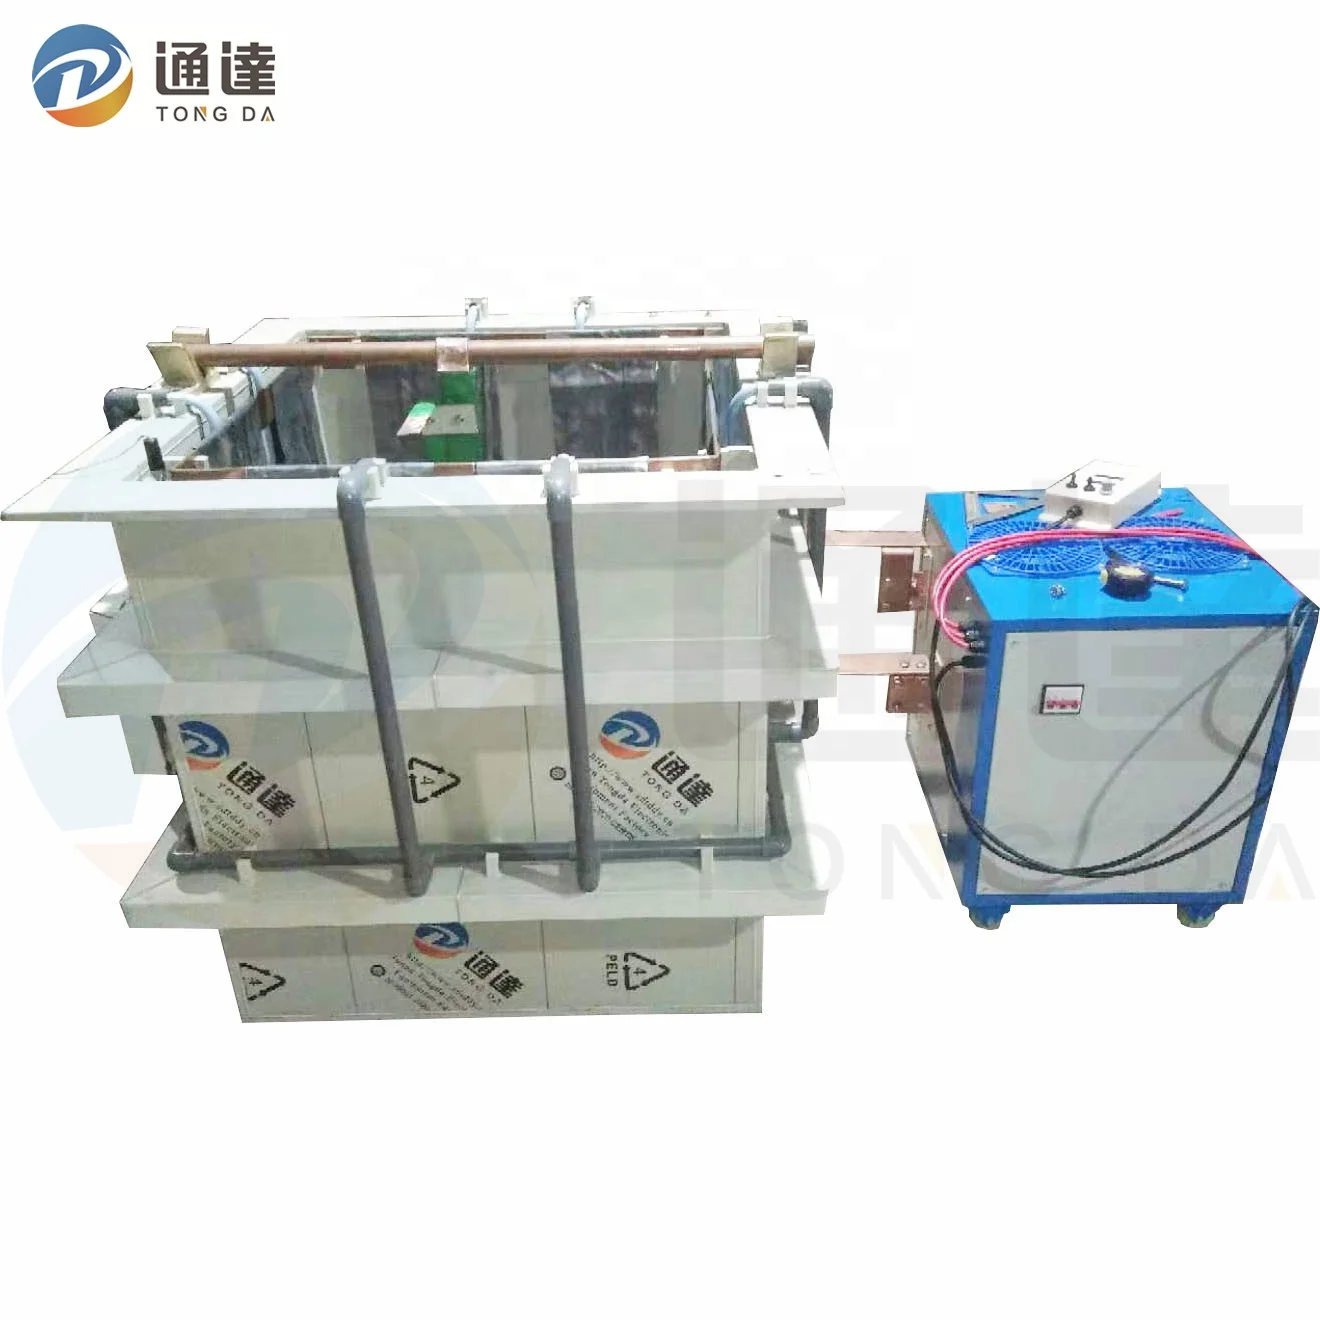 Junan Tongda Small Electroplating Machine Electroplating Equipment